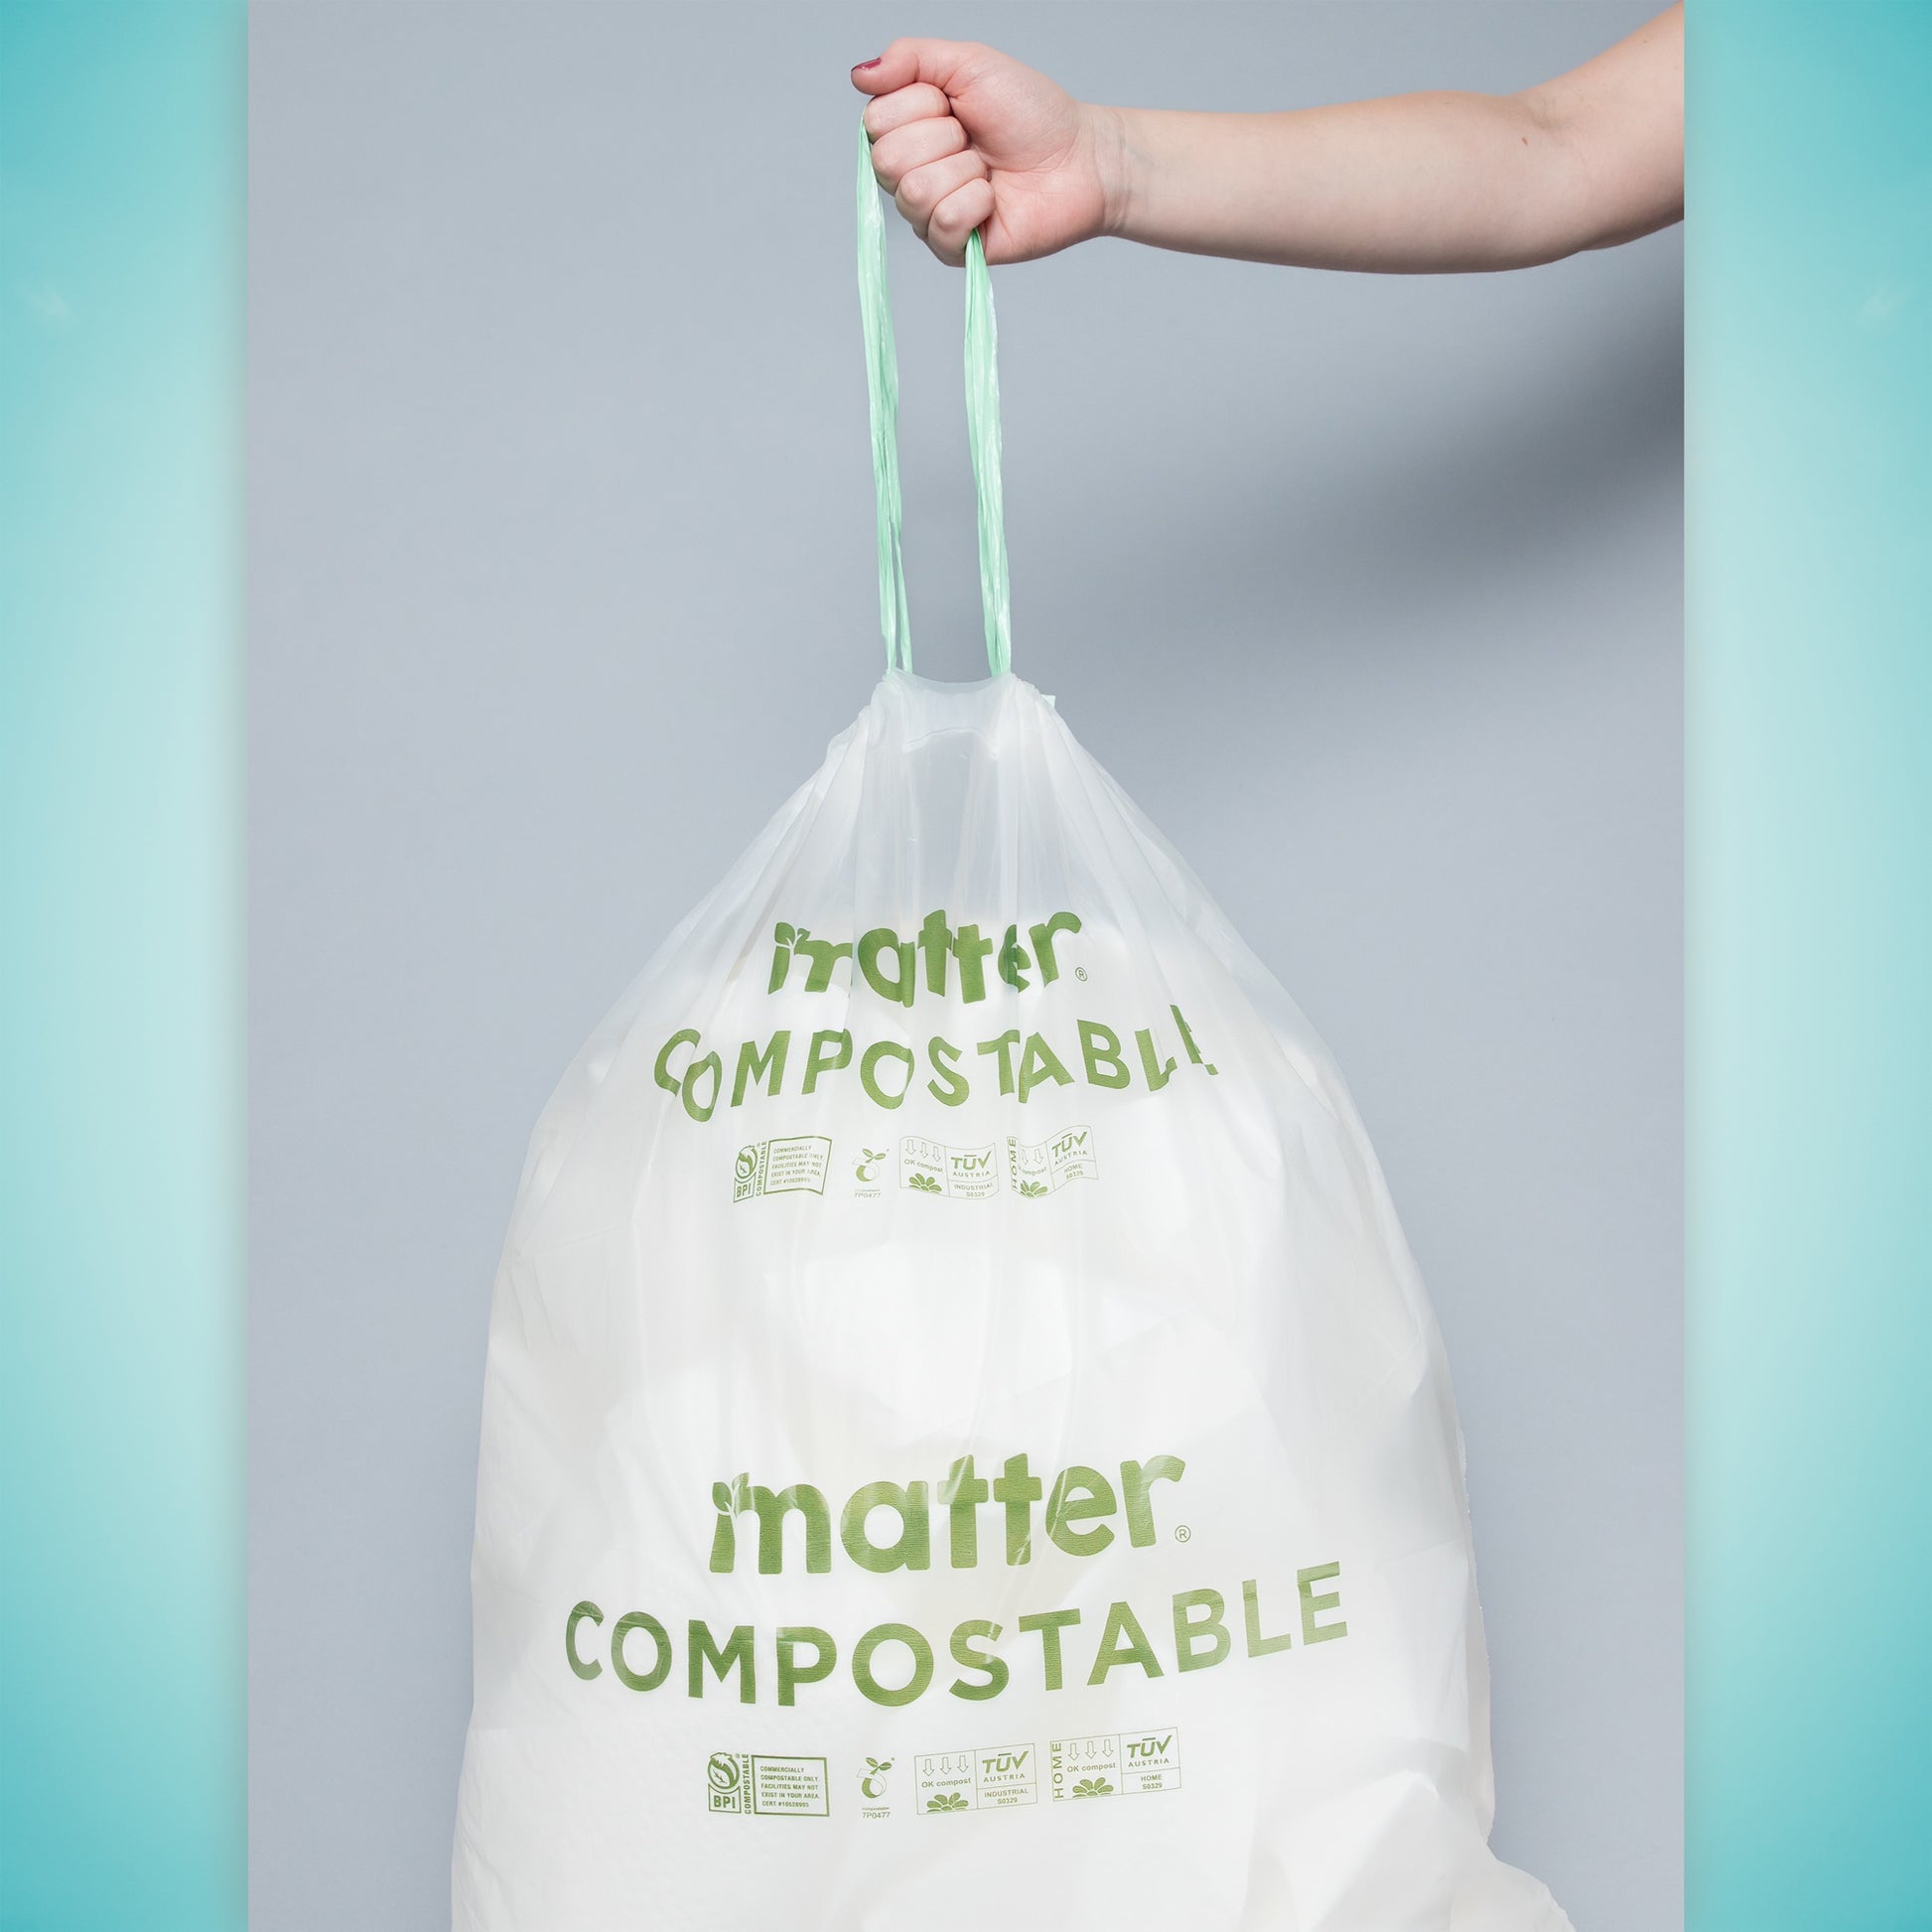 Compostable Tall Kitchen Drawstring Bags, 13 Gallon, 49.2 Liter